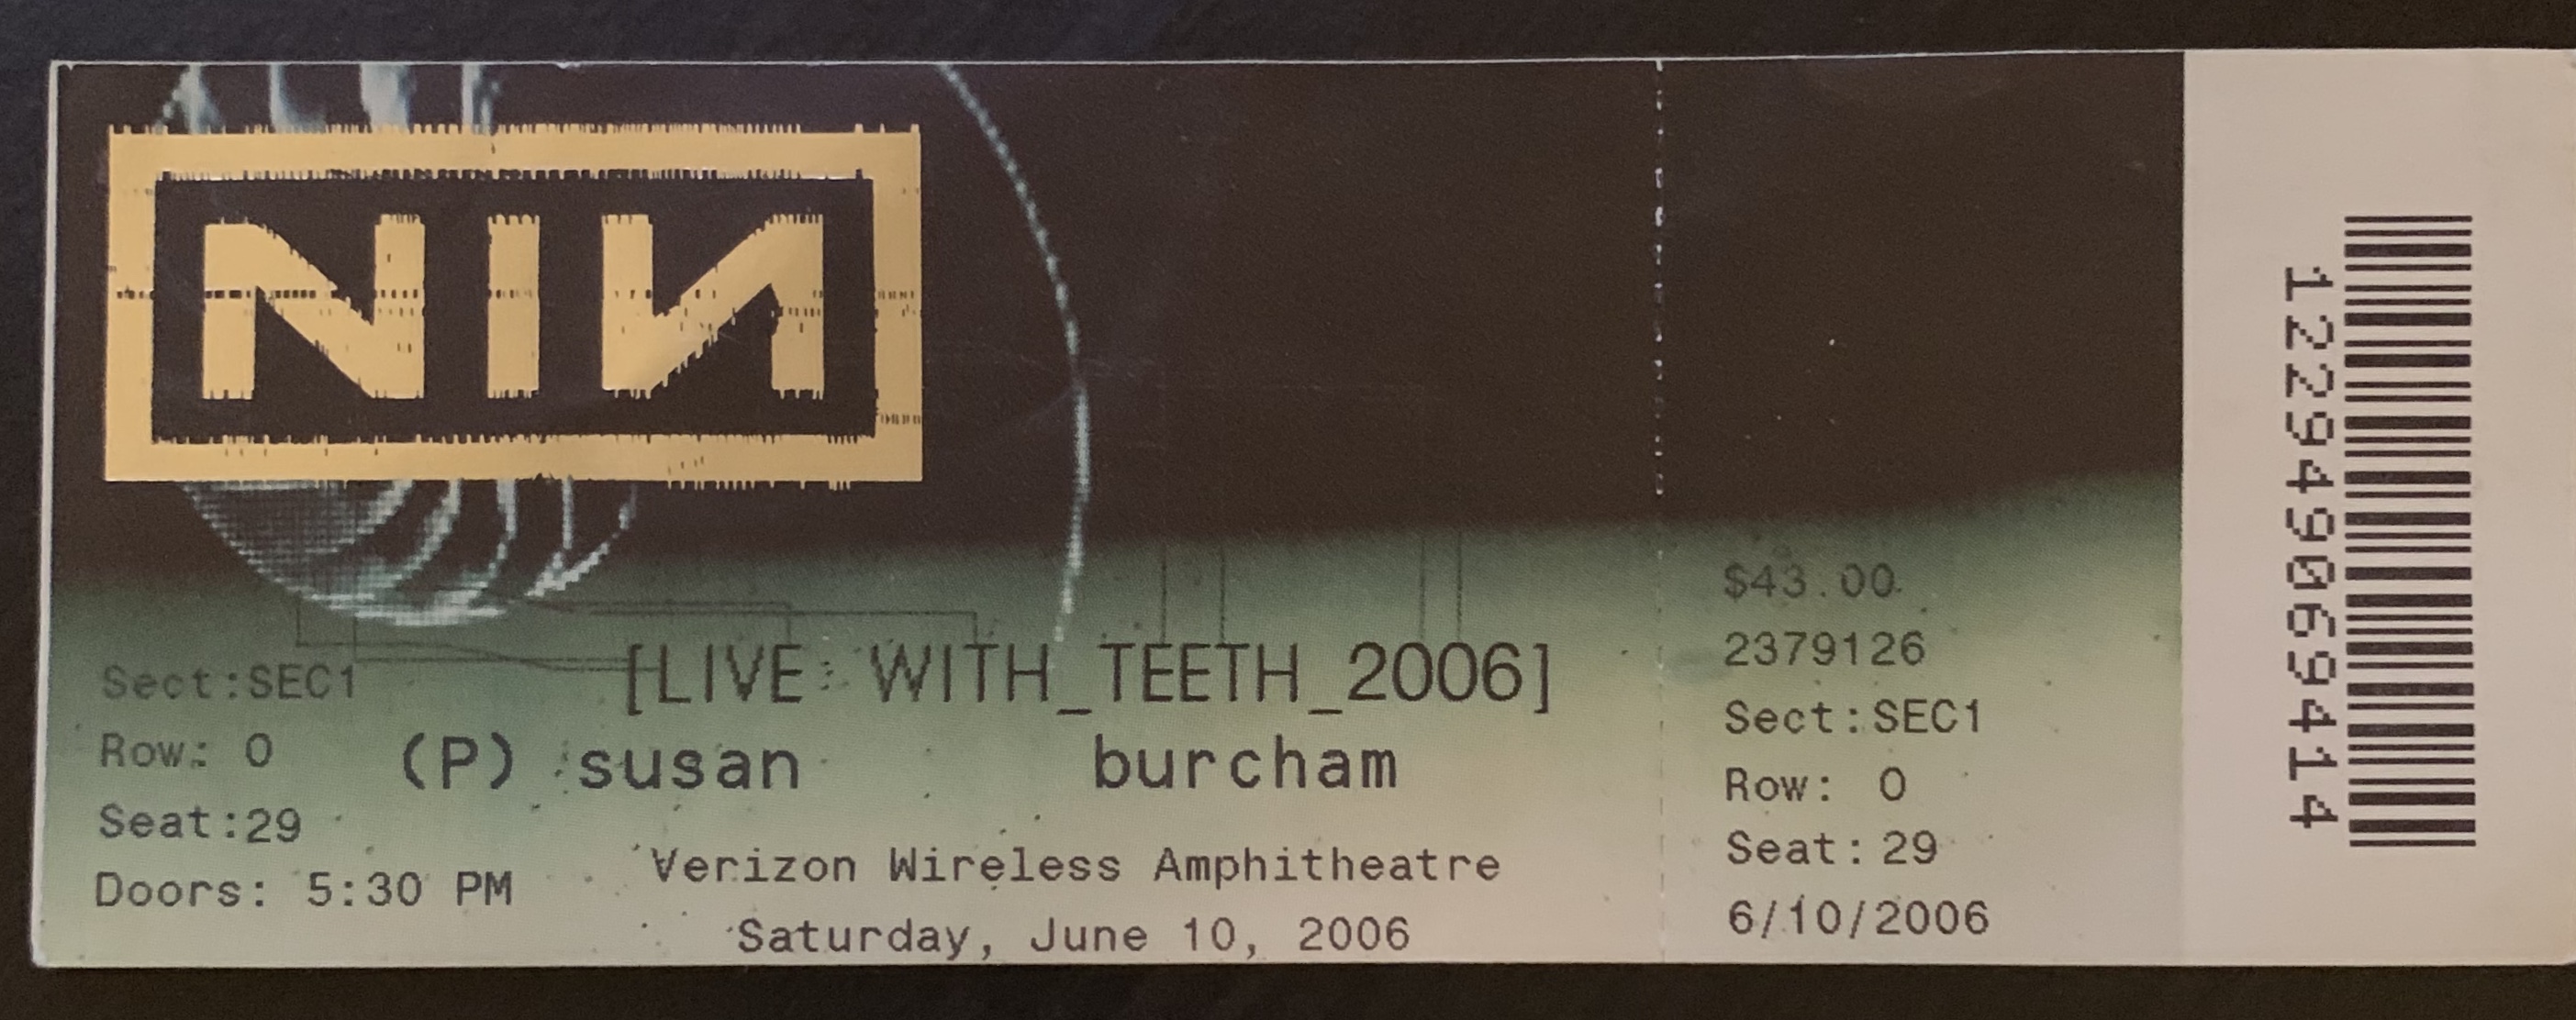 2006/06/10 Ticket